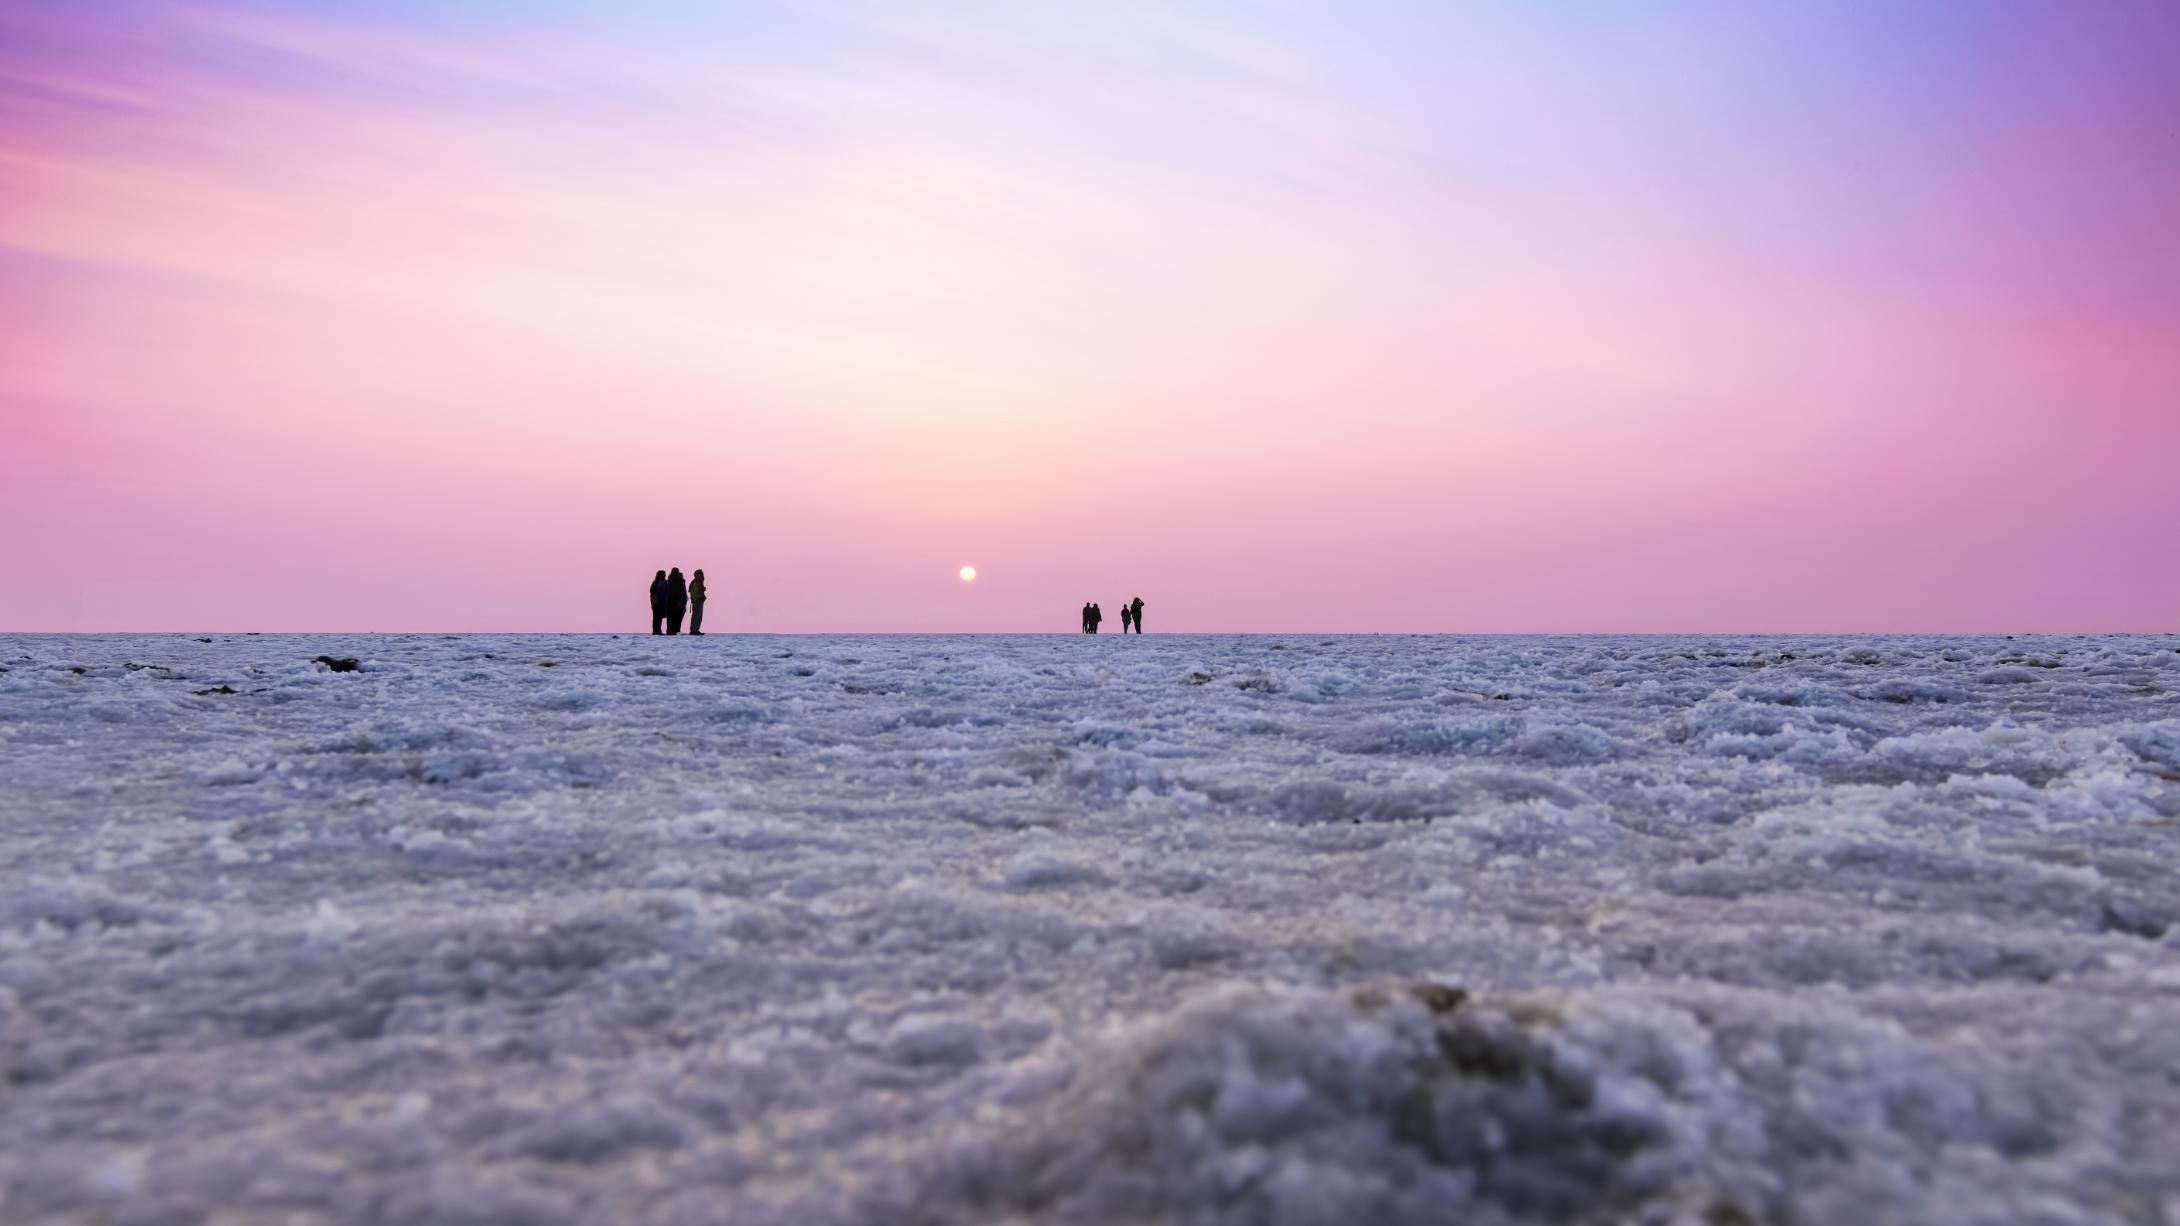 Rann of Kutch: Explore India's largest salt desert | CNN Travel